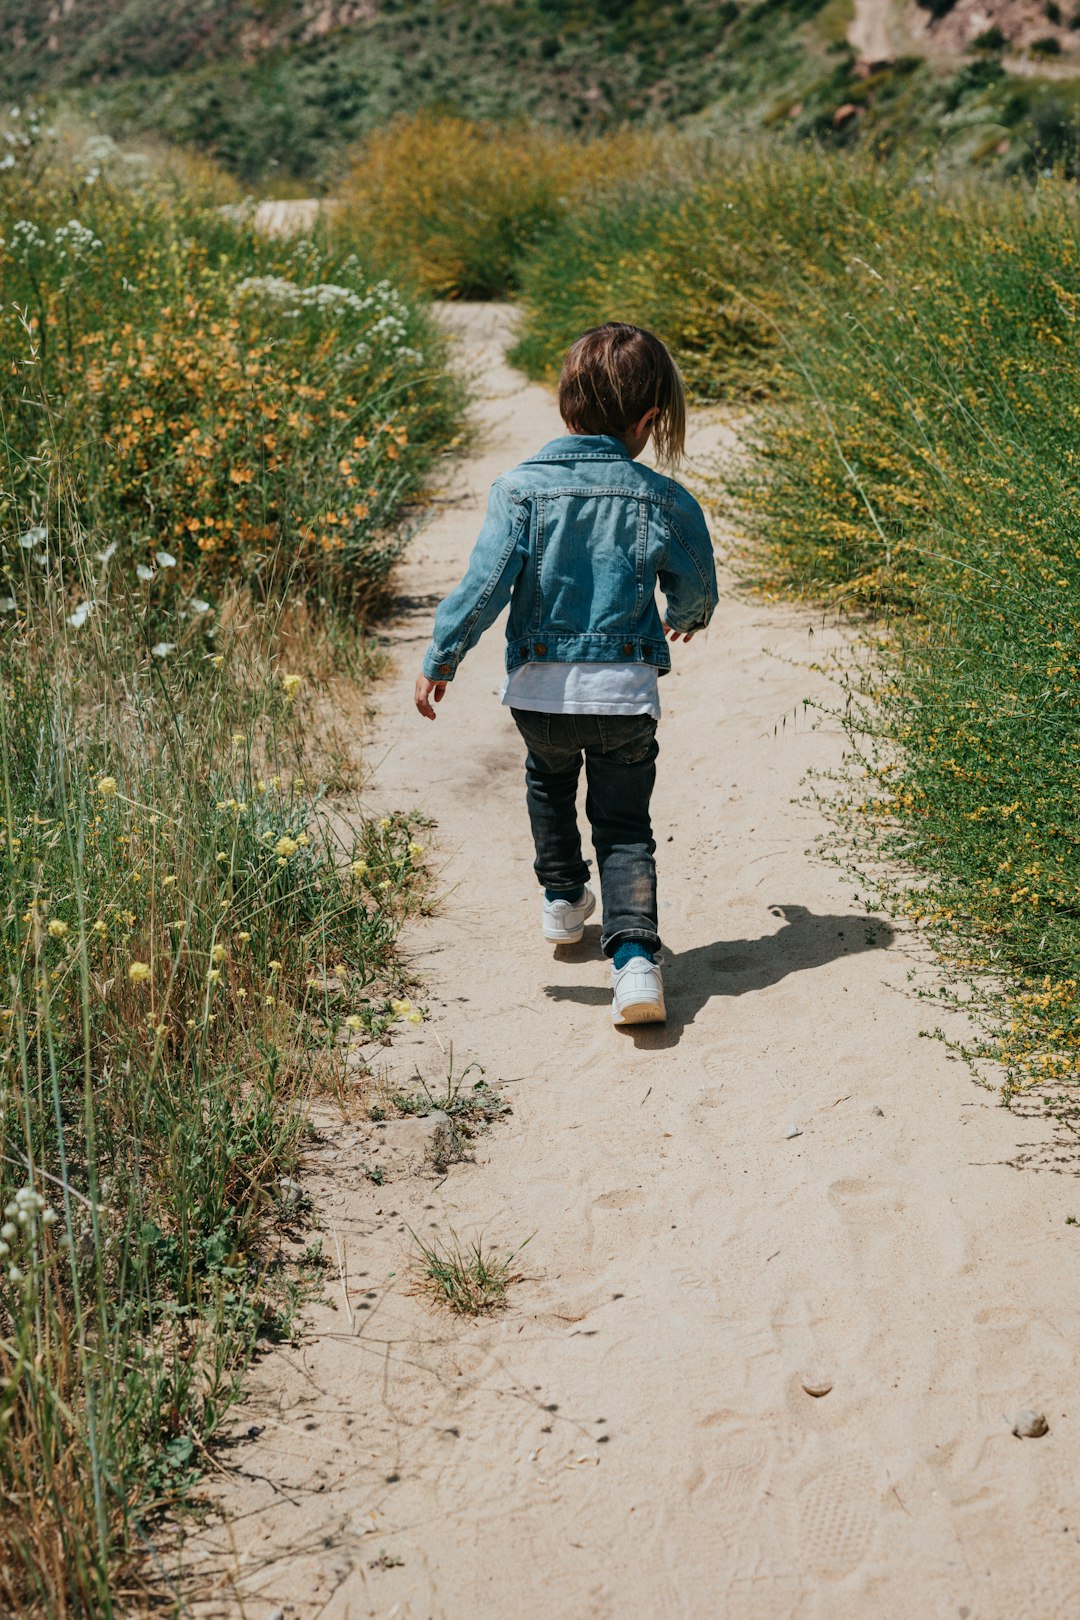 girl in blue jacket walking on dirt road during daytime